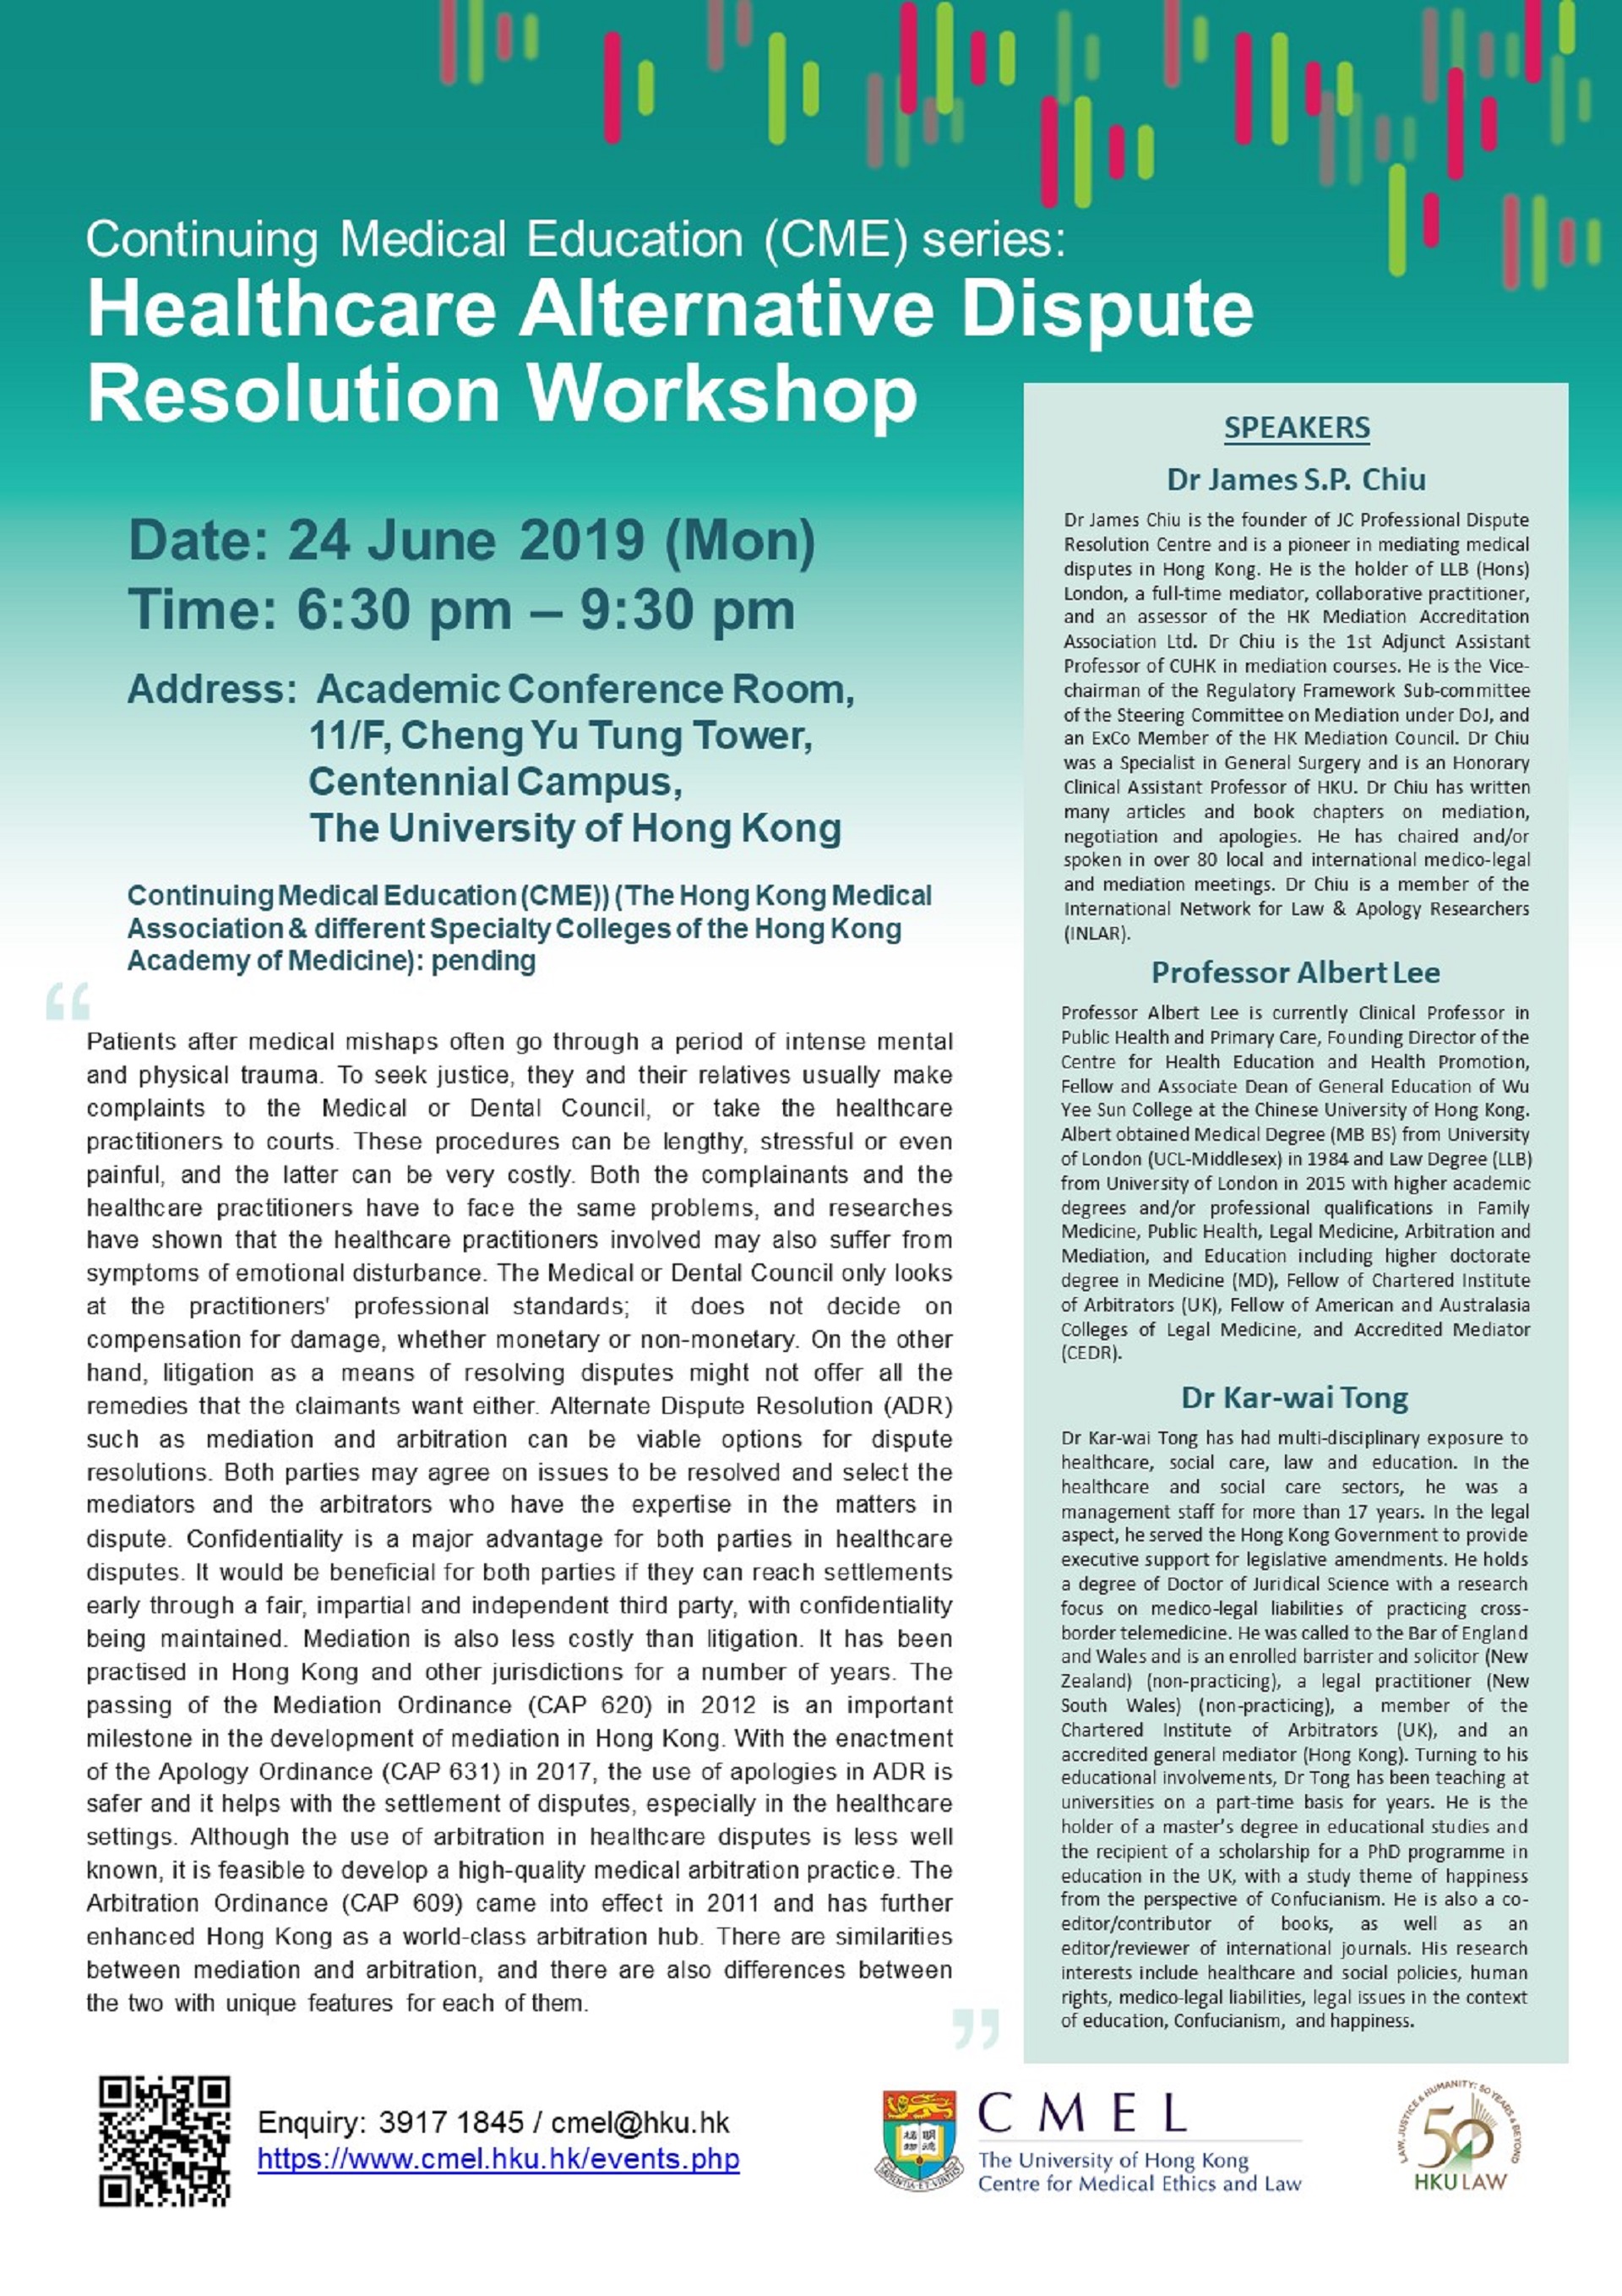 Healthcare Alternative Dispute Resolution Workshop, June 24, 6:30pm, 11/F CCT, Dr James S.P. Chiu, Prof Albert Lee, Dr Kar-wai Tong